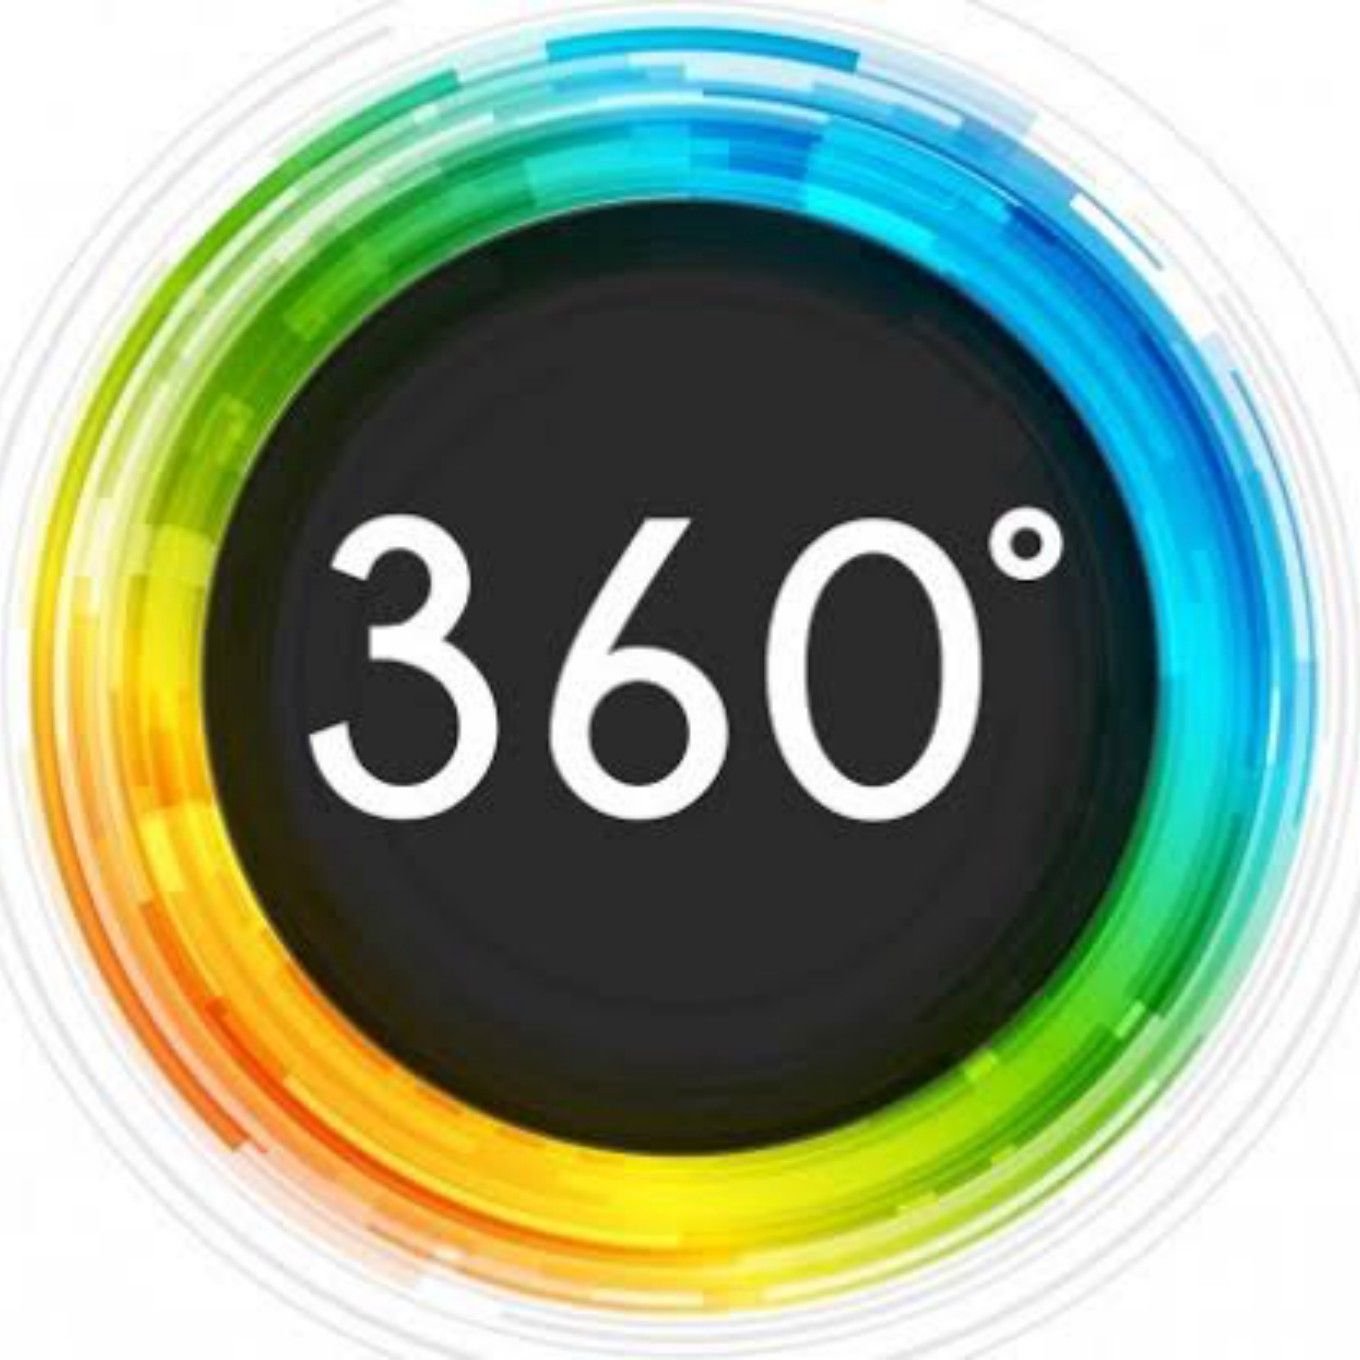 360tv. Значок 360. Логотип 360 градусов. Поворот на 360 градусов. Вращение на 360 градусов.